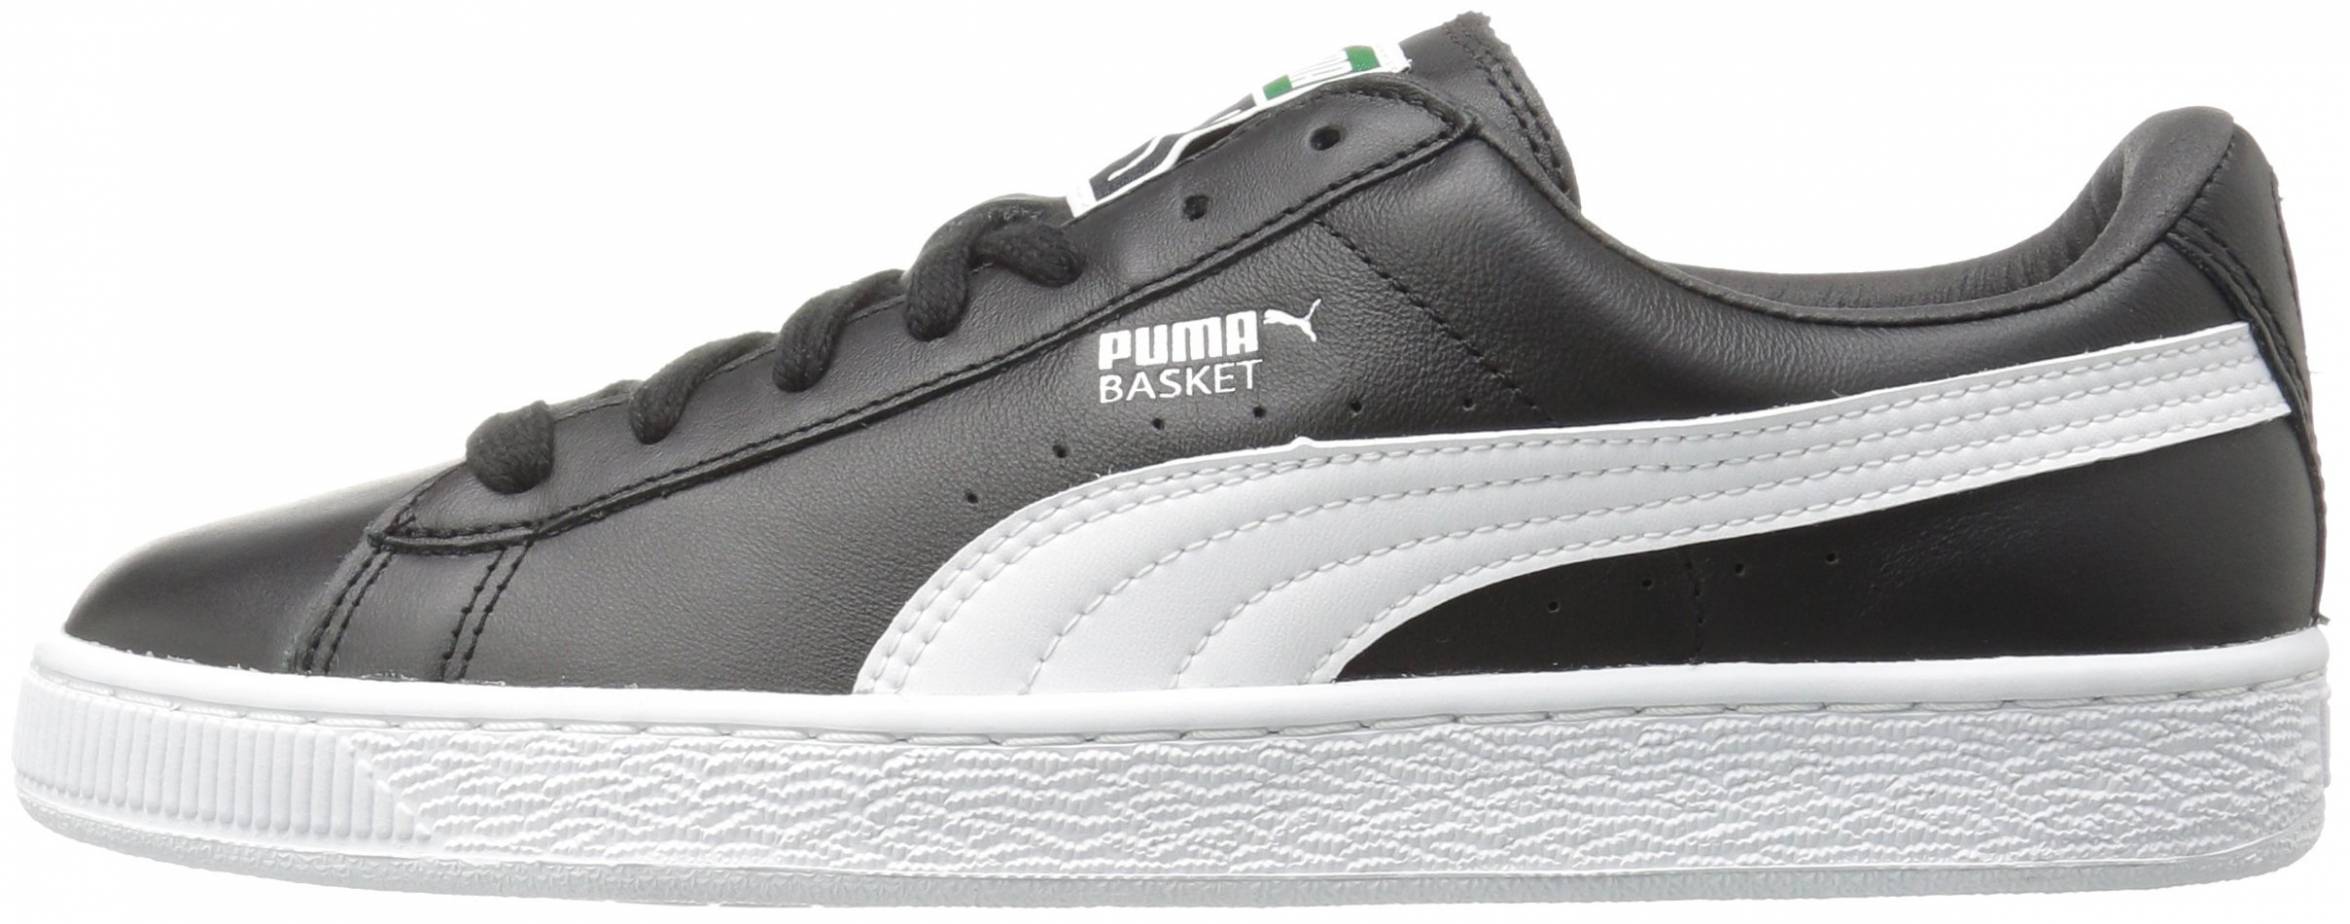 Save 61% on Puma Basketball Sneakers 